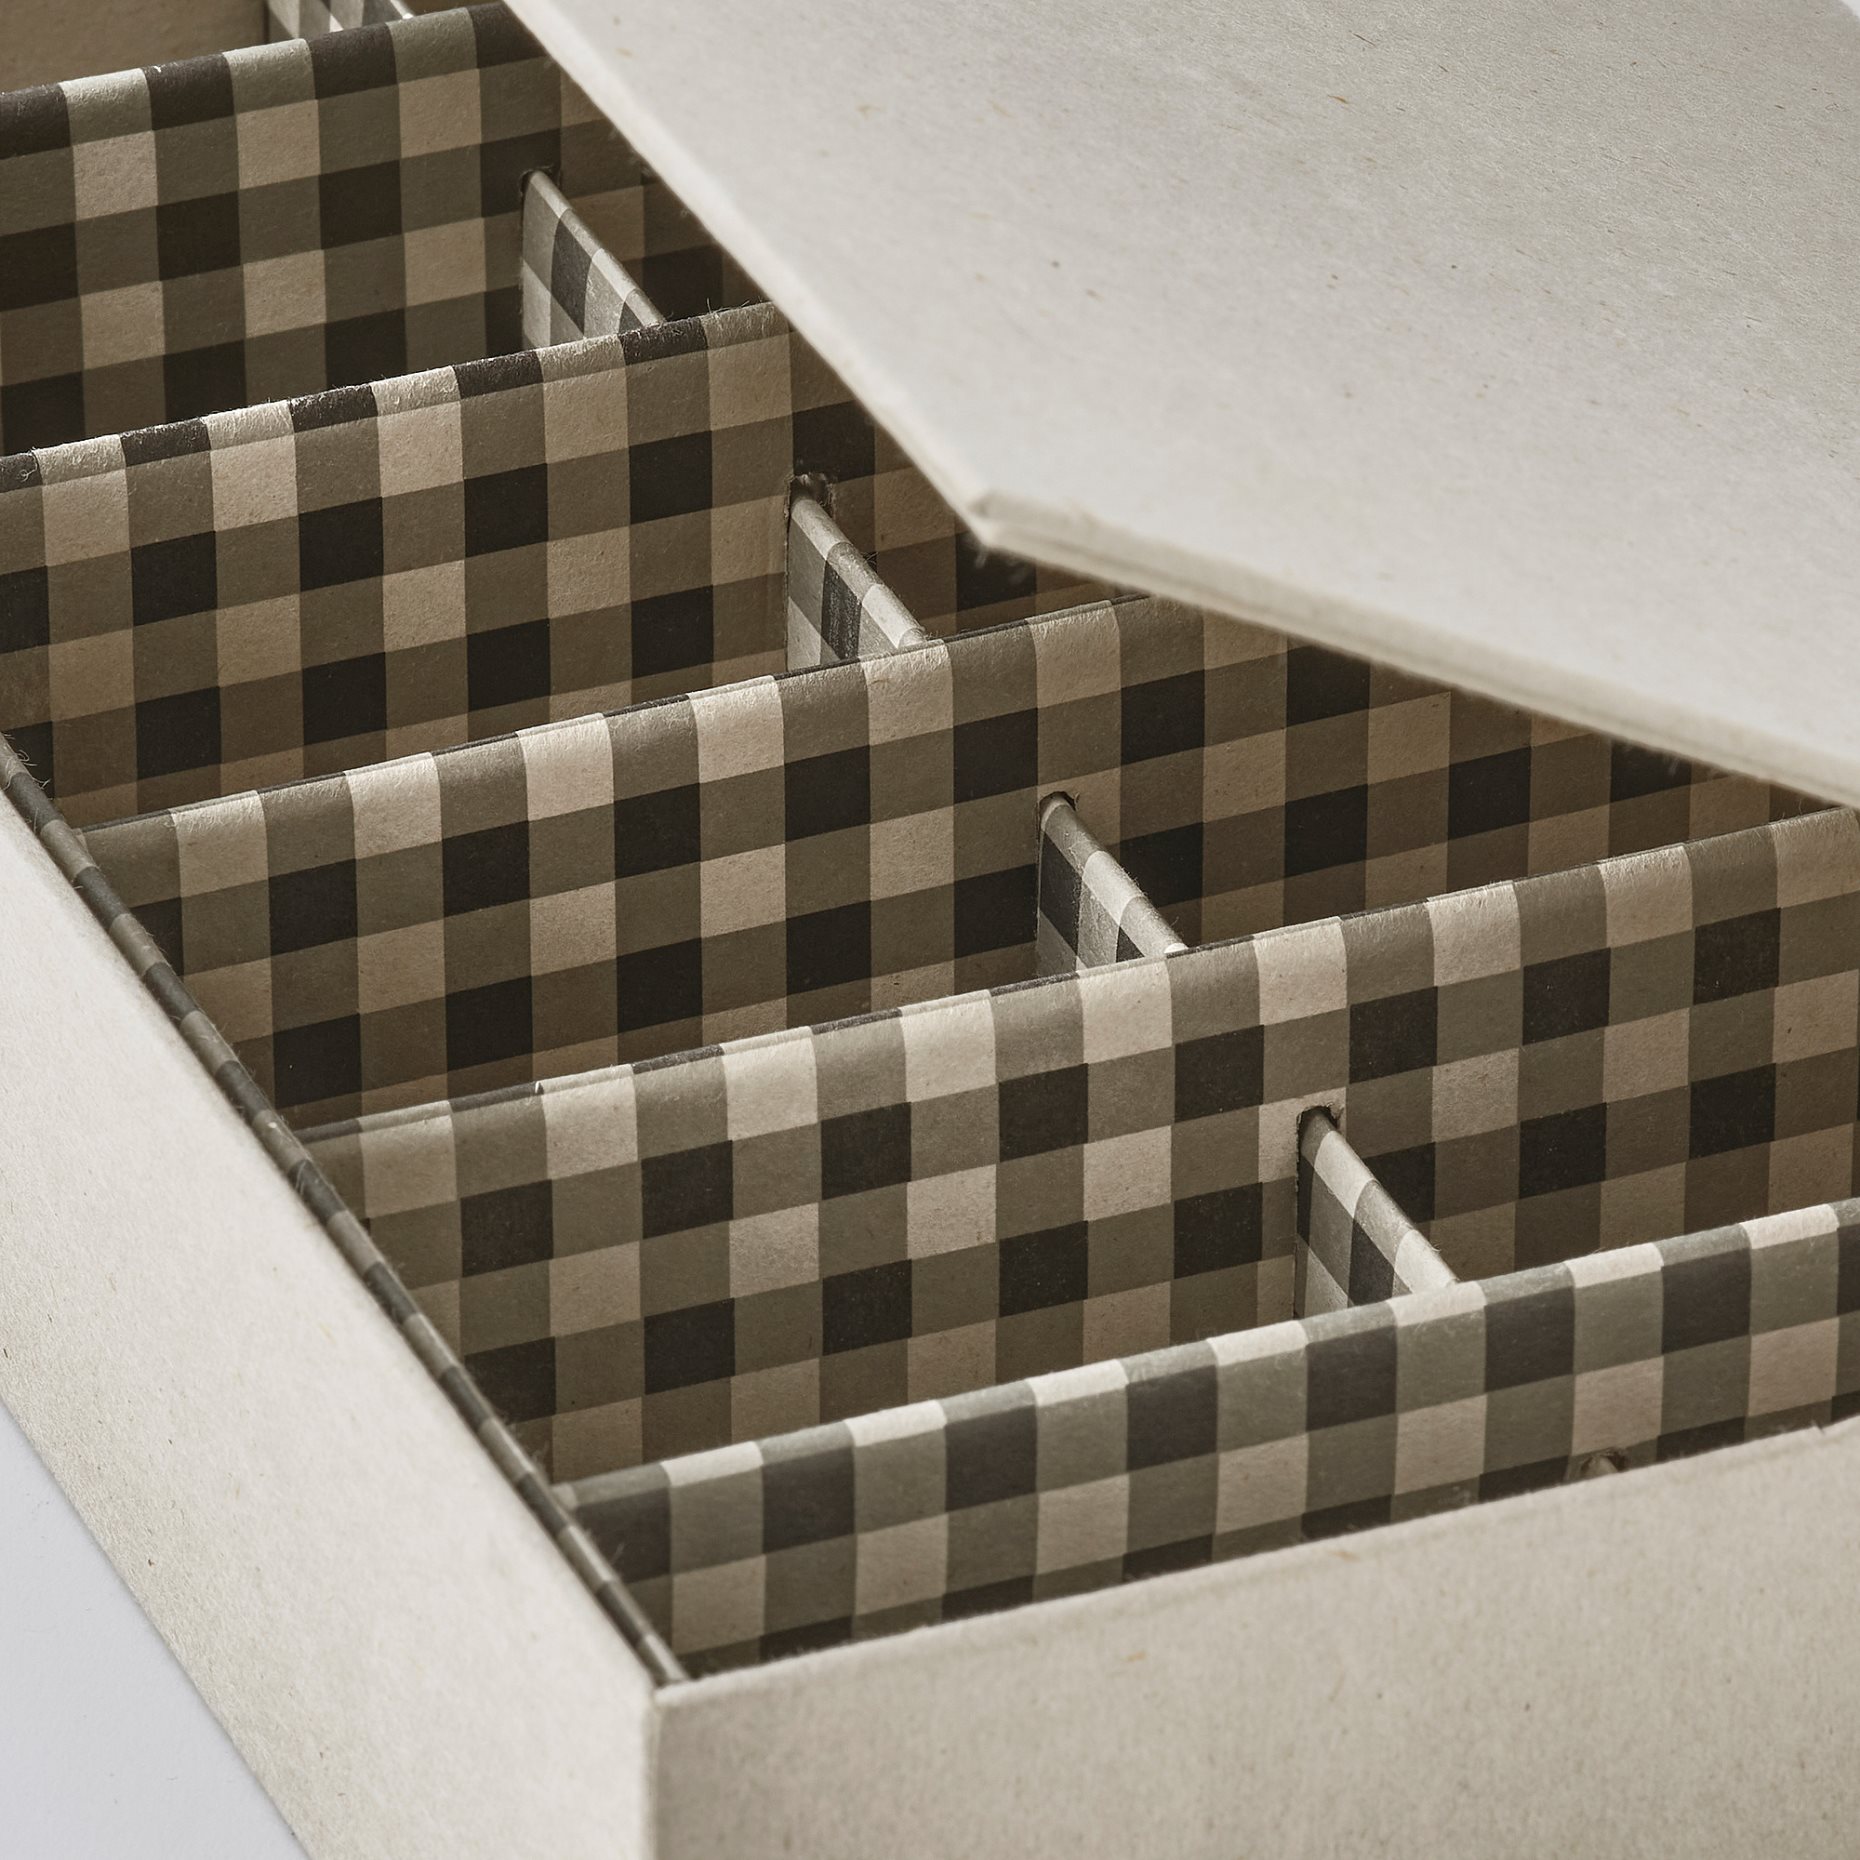 RAGODLING, κουτί με διαχωριστικά, 30x18x6 cm, 605.658.21